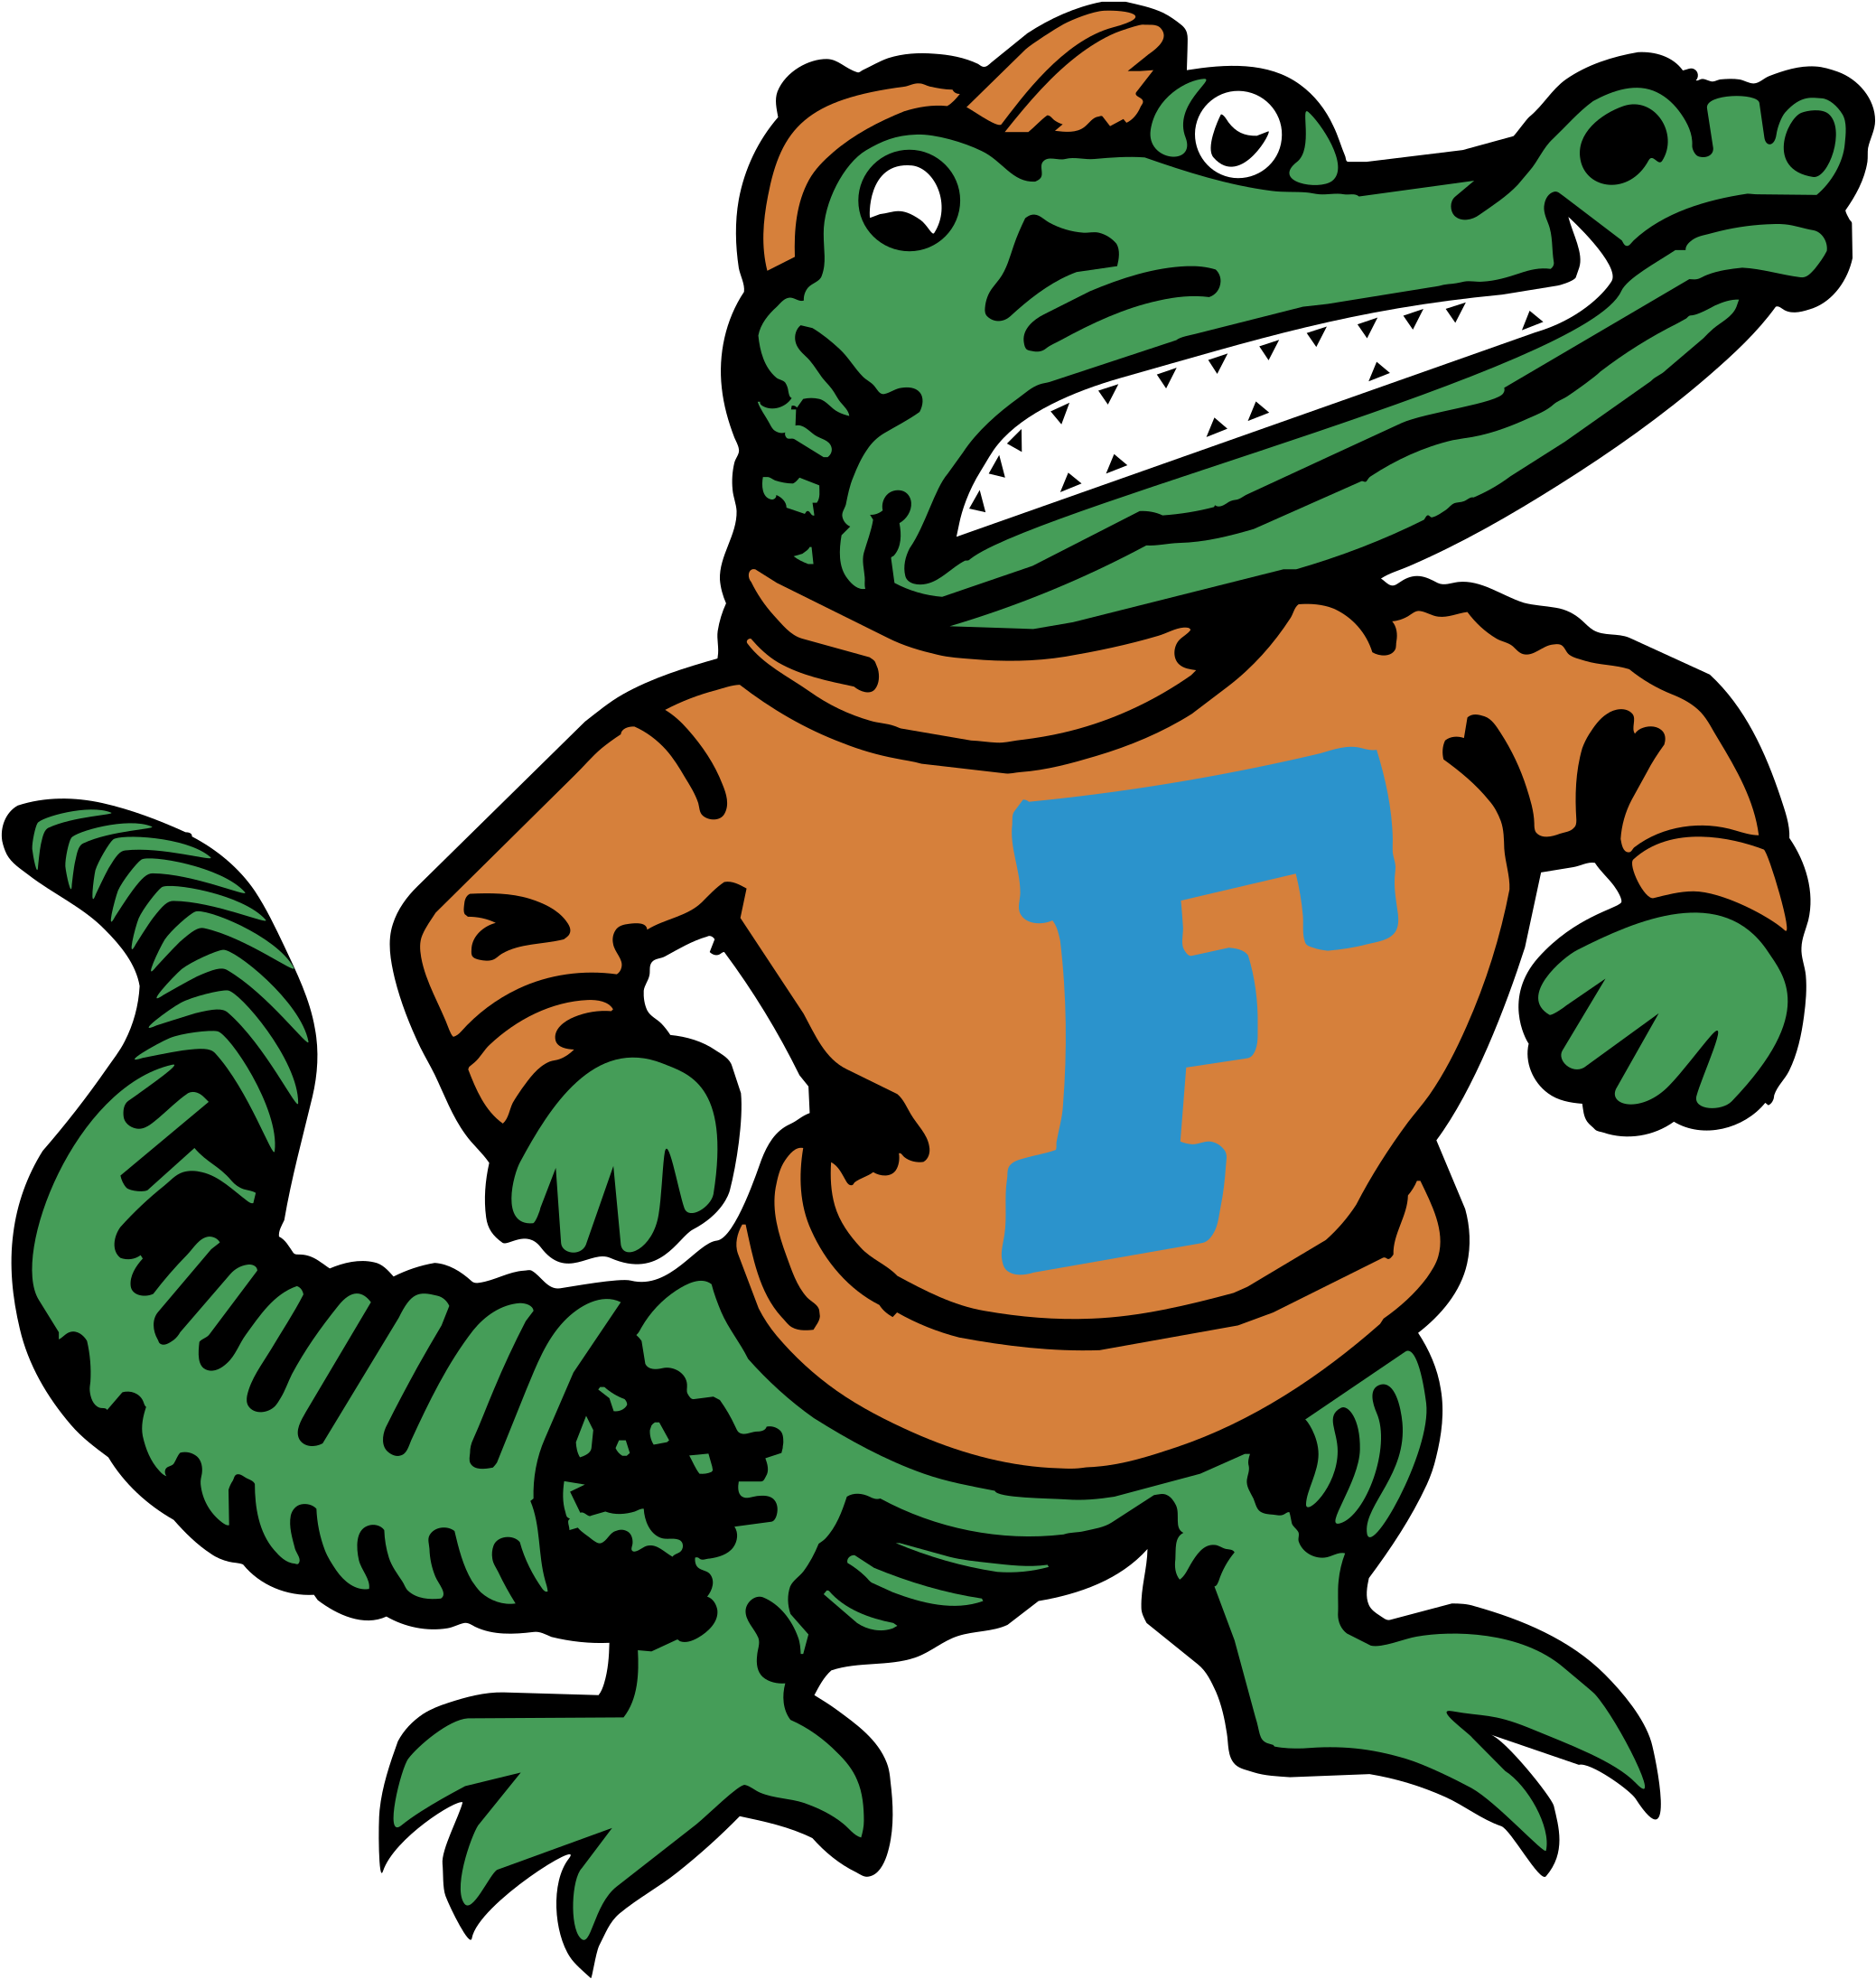 Florida Gators Logo Black And White - Florida Gators Old Logo (2400x2400)